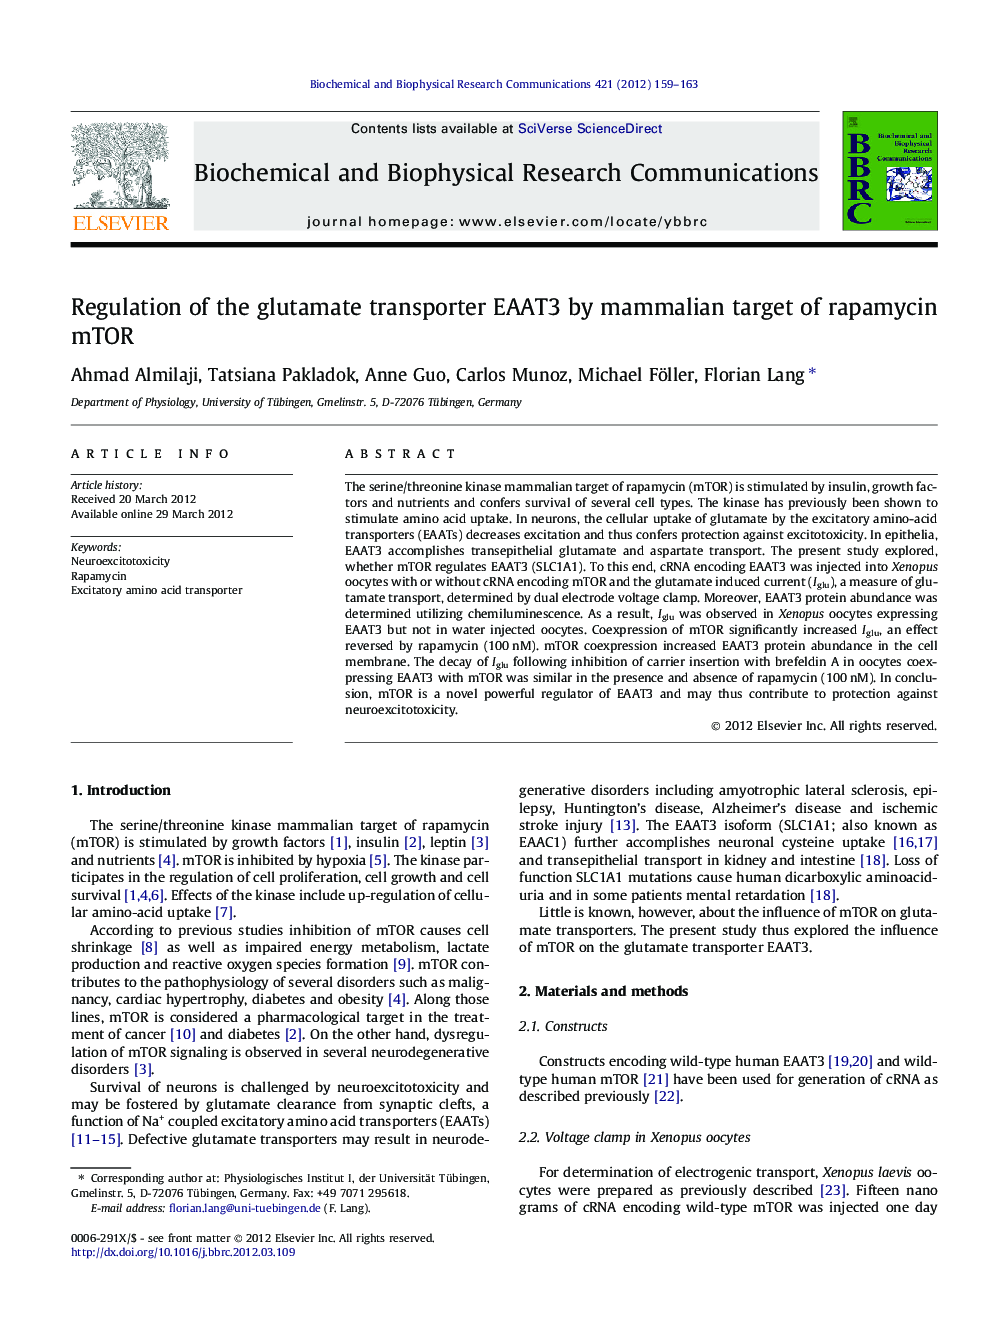 Regulation of the glutamate transporter EAAT3 by mammalian target of rapamycin mTOR